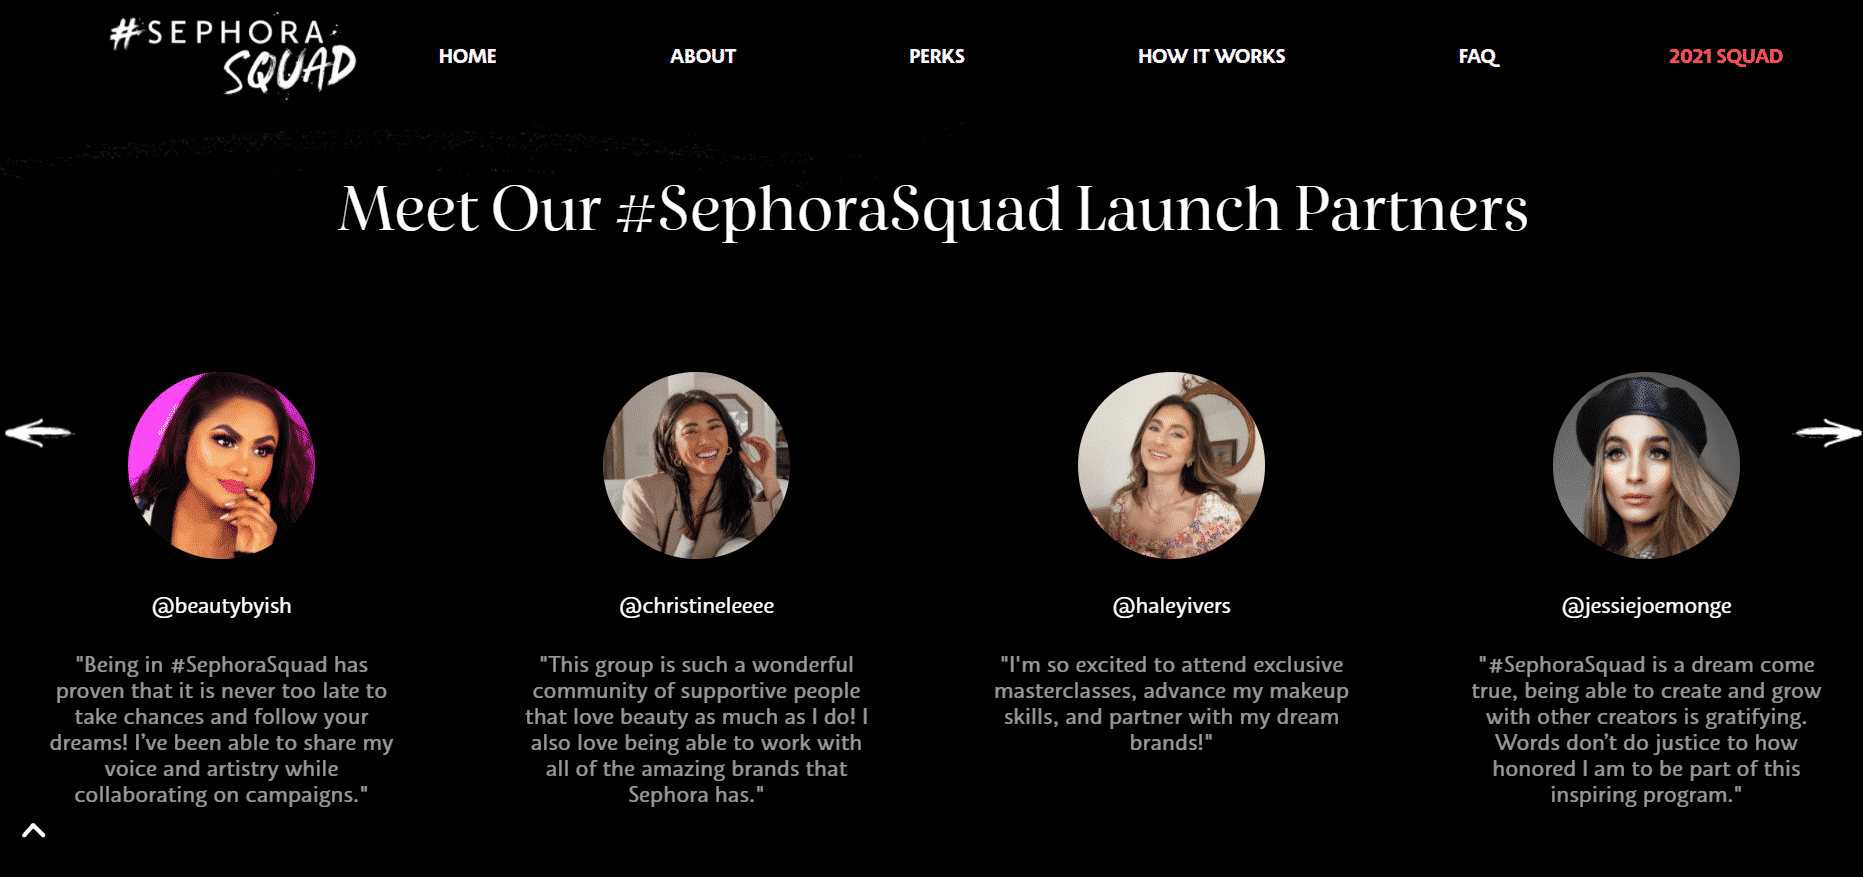 Sephora brand ambassadors